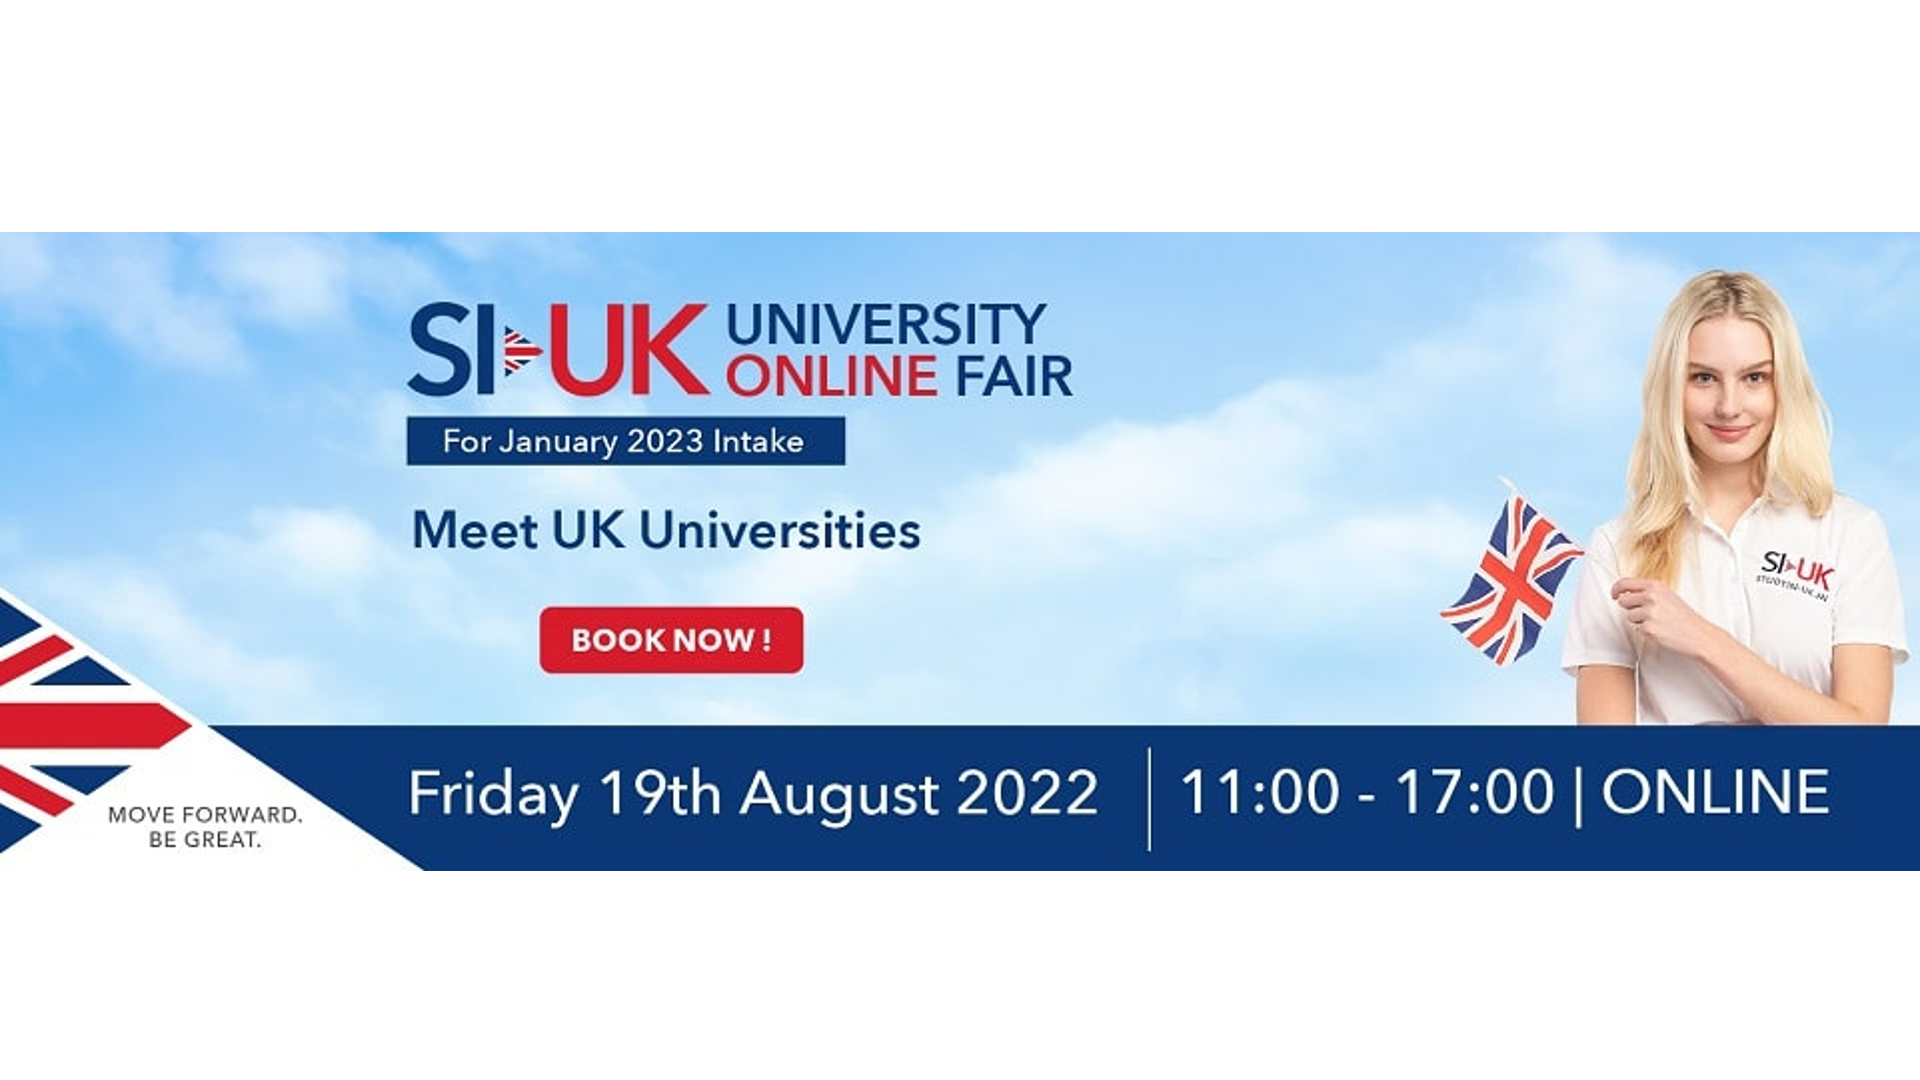 SI-UK University Fair Indore 2022, Online Event